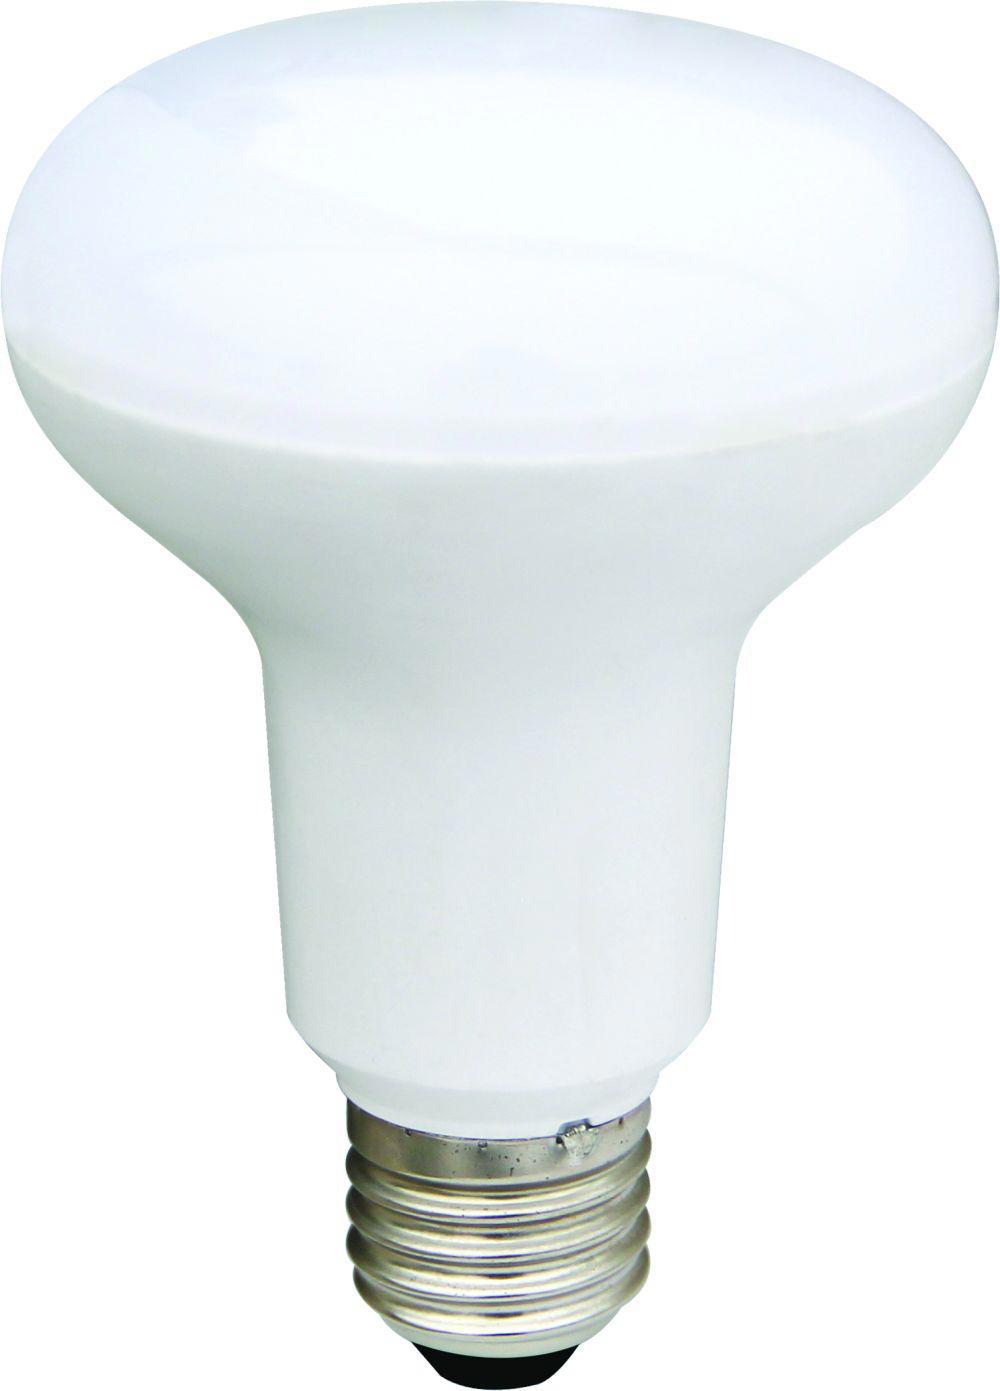 90121180 Лампа Premium светодионая E27 12 Вт рефлекторная 1080 Лм теплый свет STLM-0112369 ECOLA